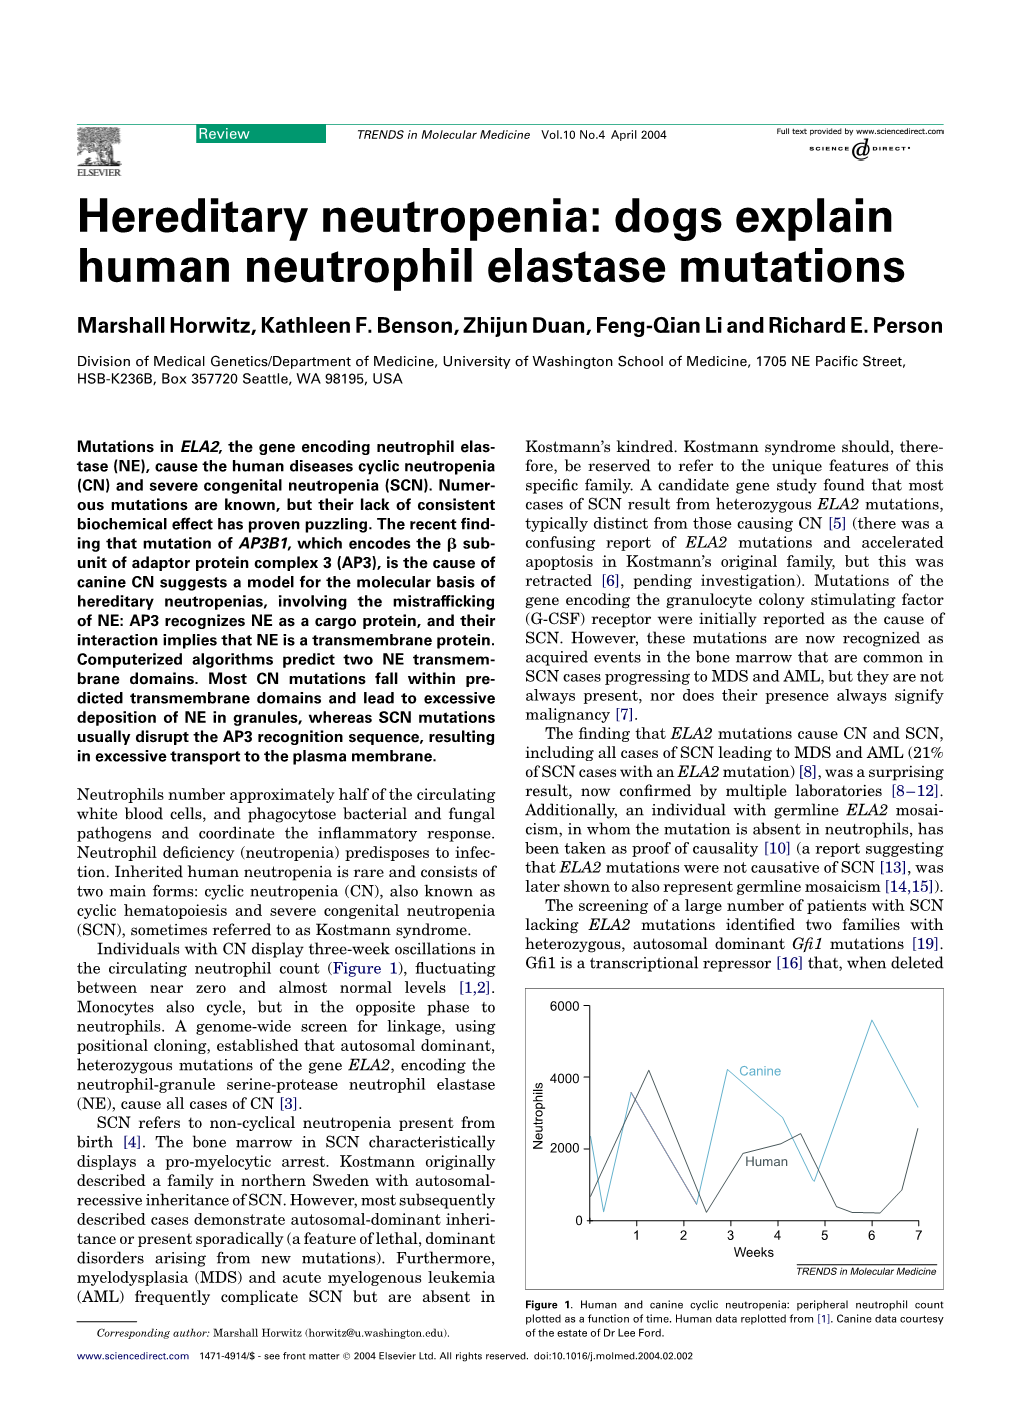 Hereditary Neutropenia: Dogs Explain Human Neutrophil Elastase Mutations